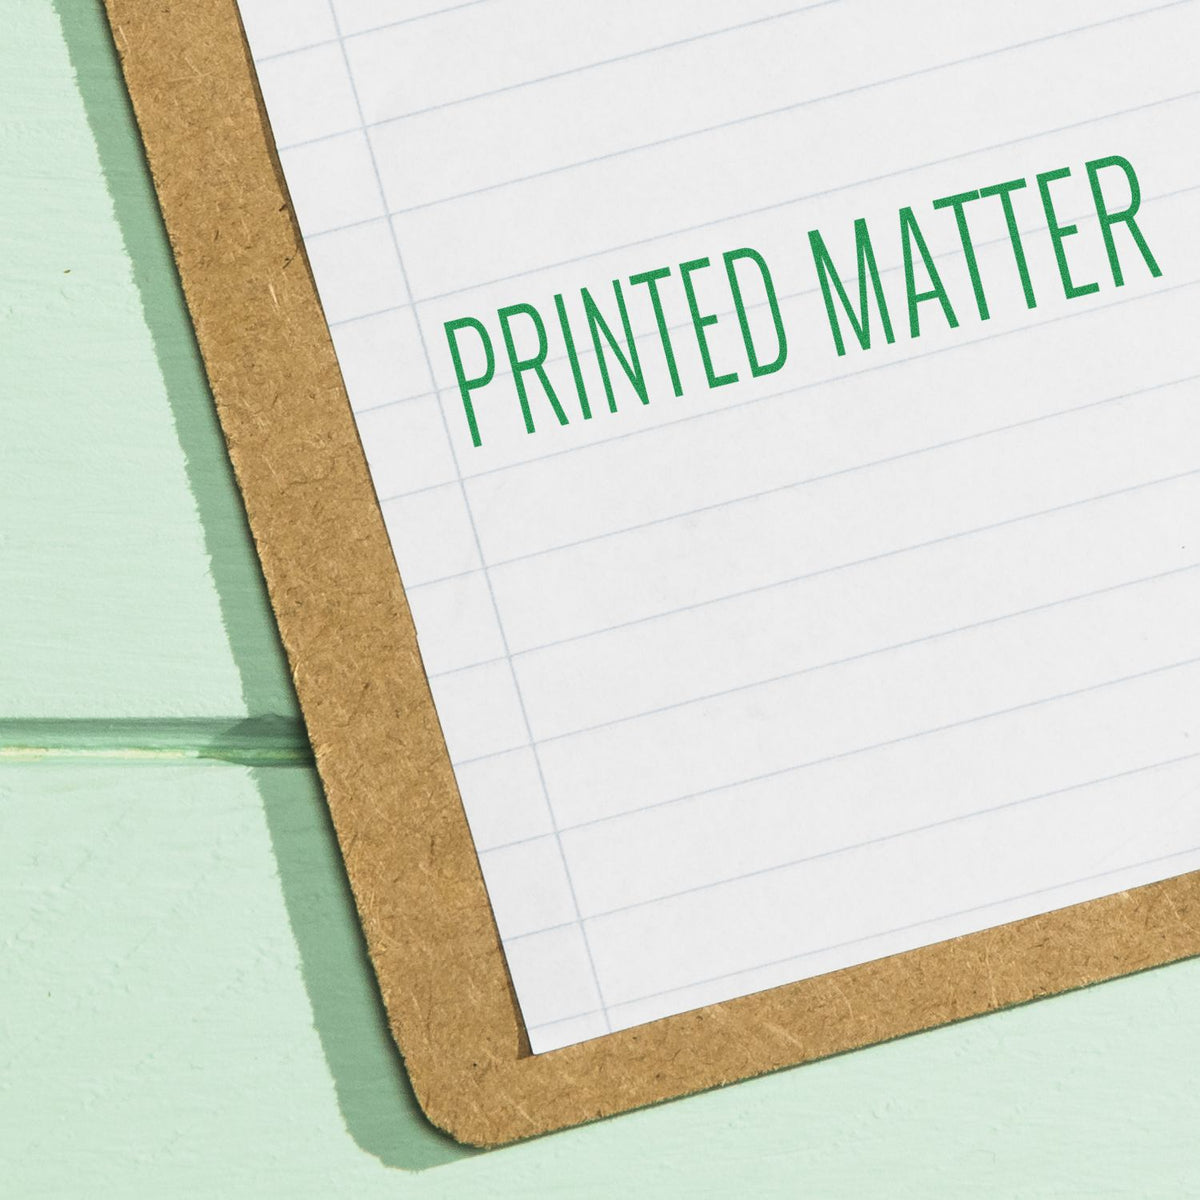 Slim Pre-Inked Printed Matter Stamp In Use